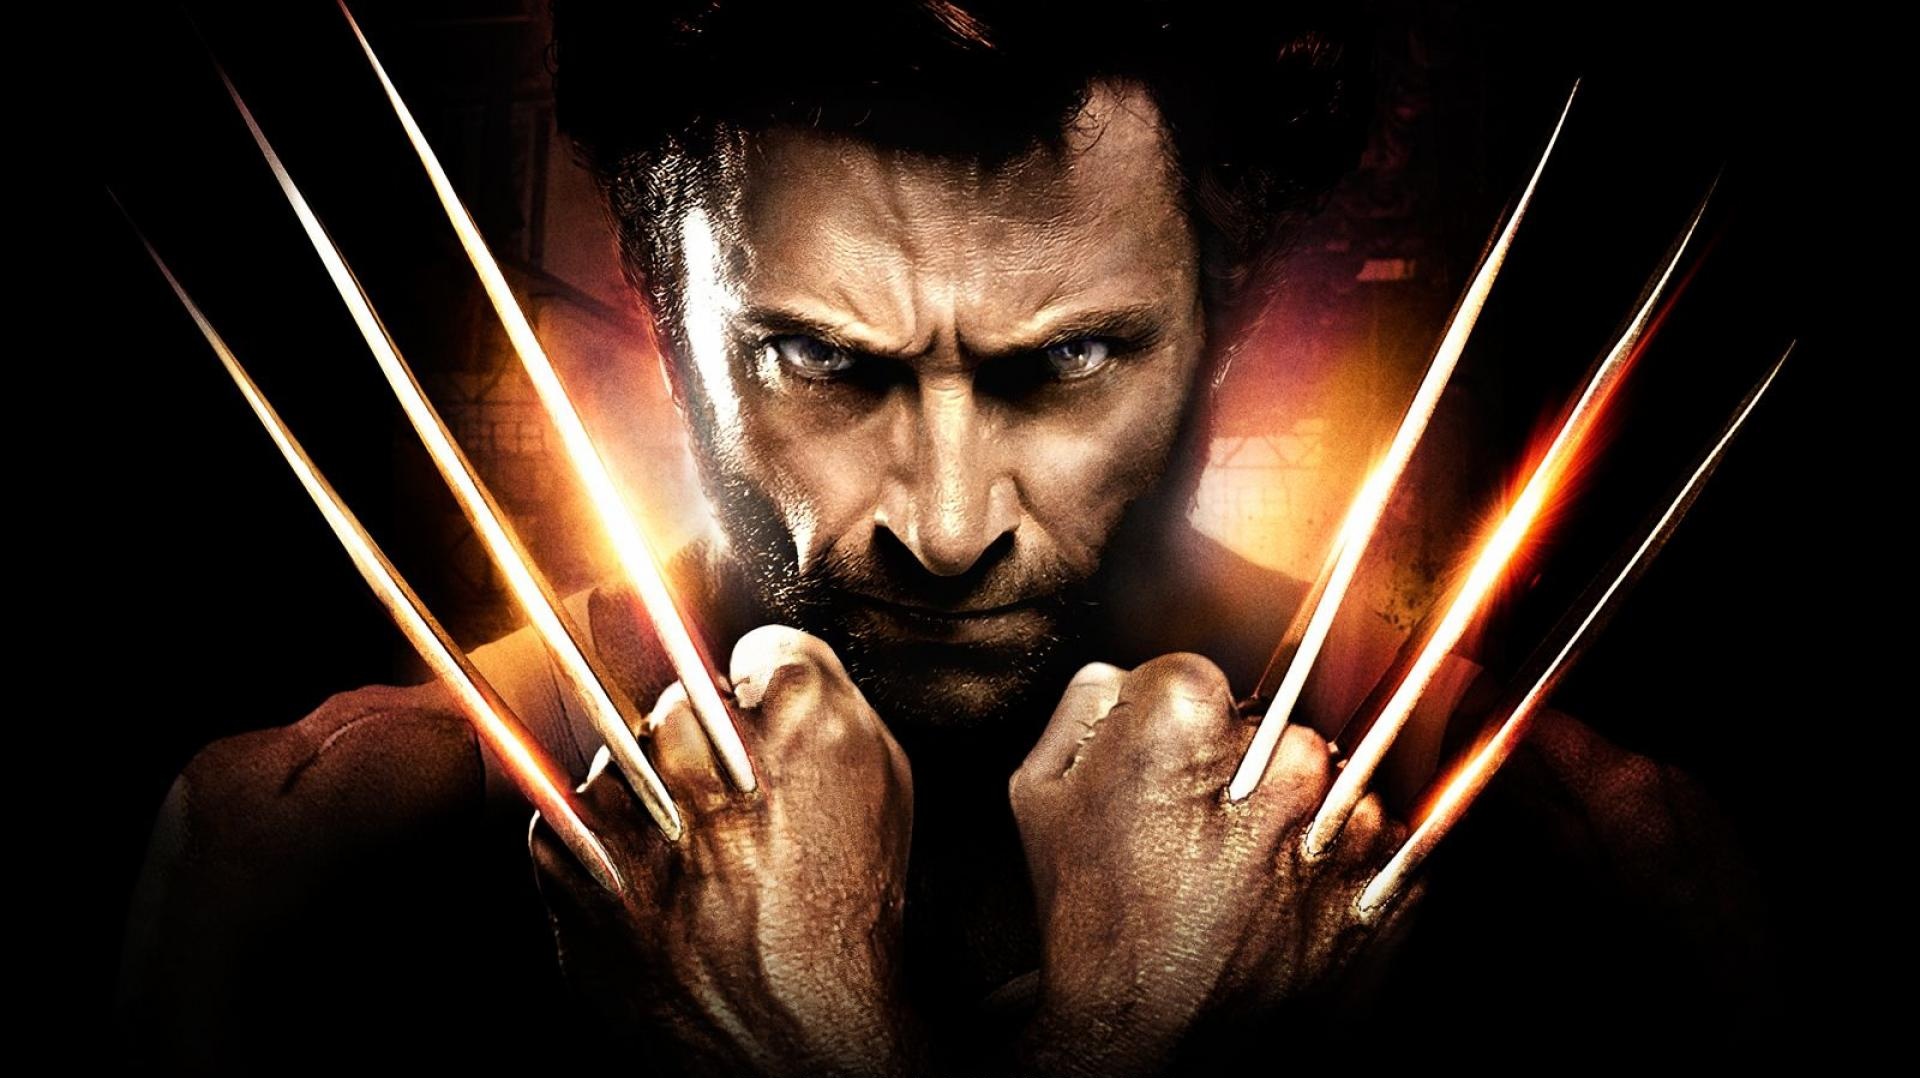 Opening This Weekend: Hugh Jackman returns as The Wolverine